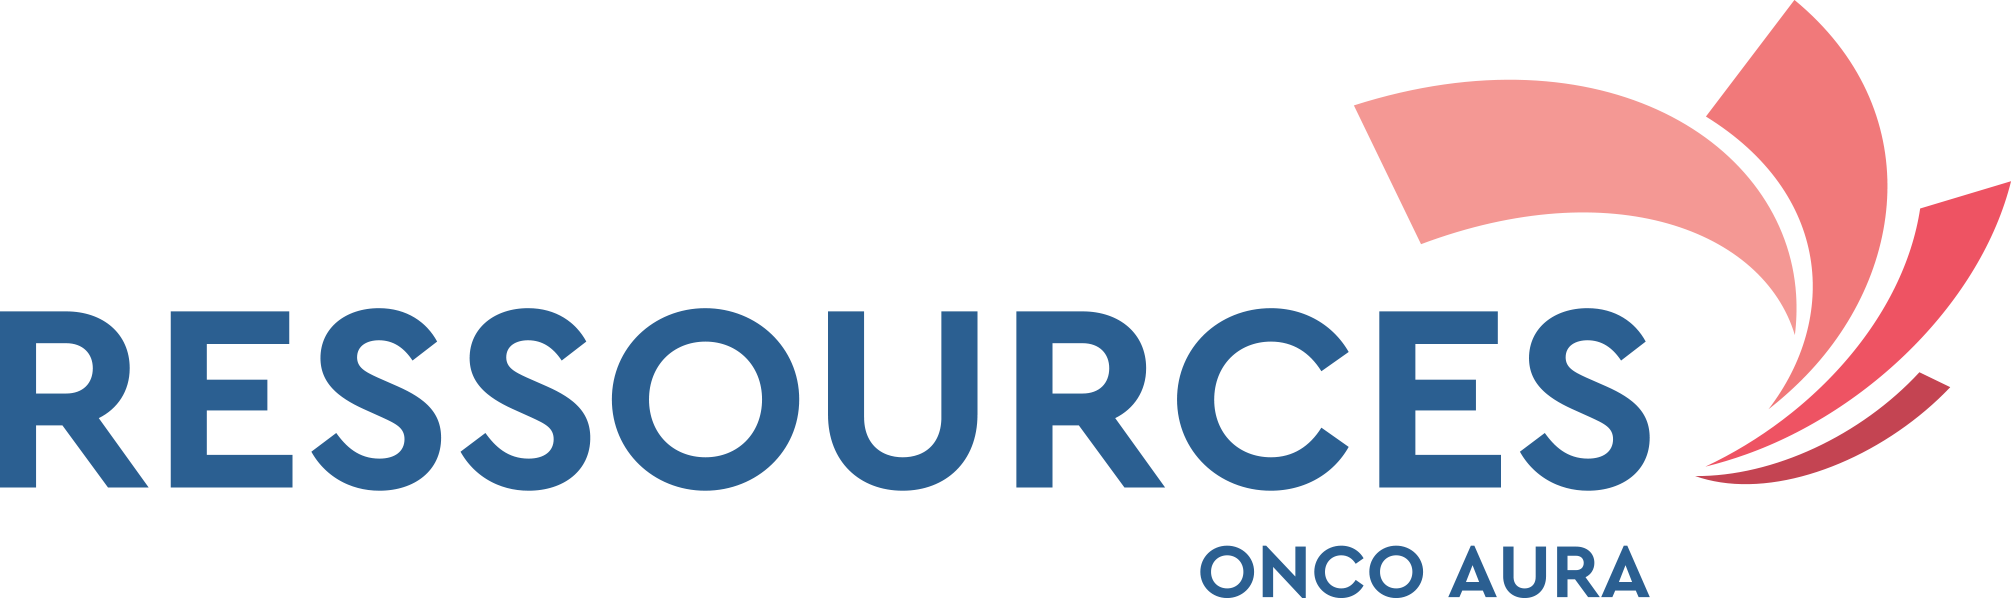 Logo-ressources-onco-aura-Q